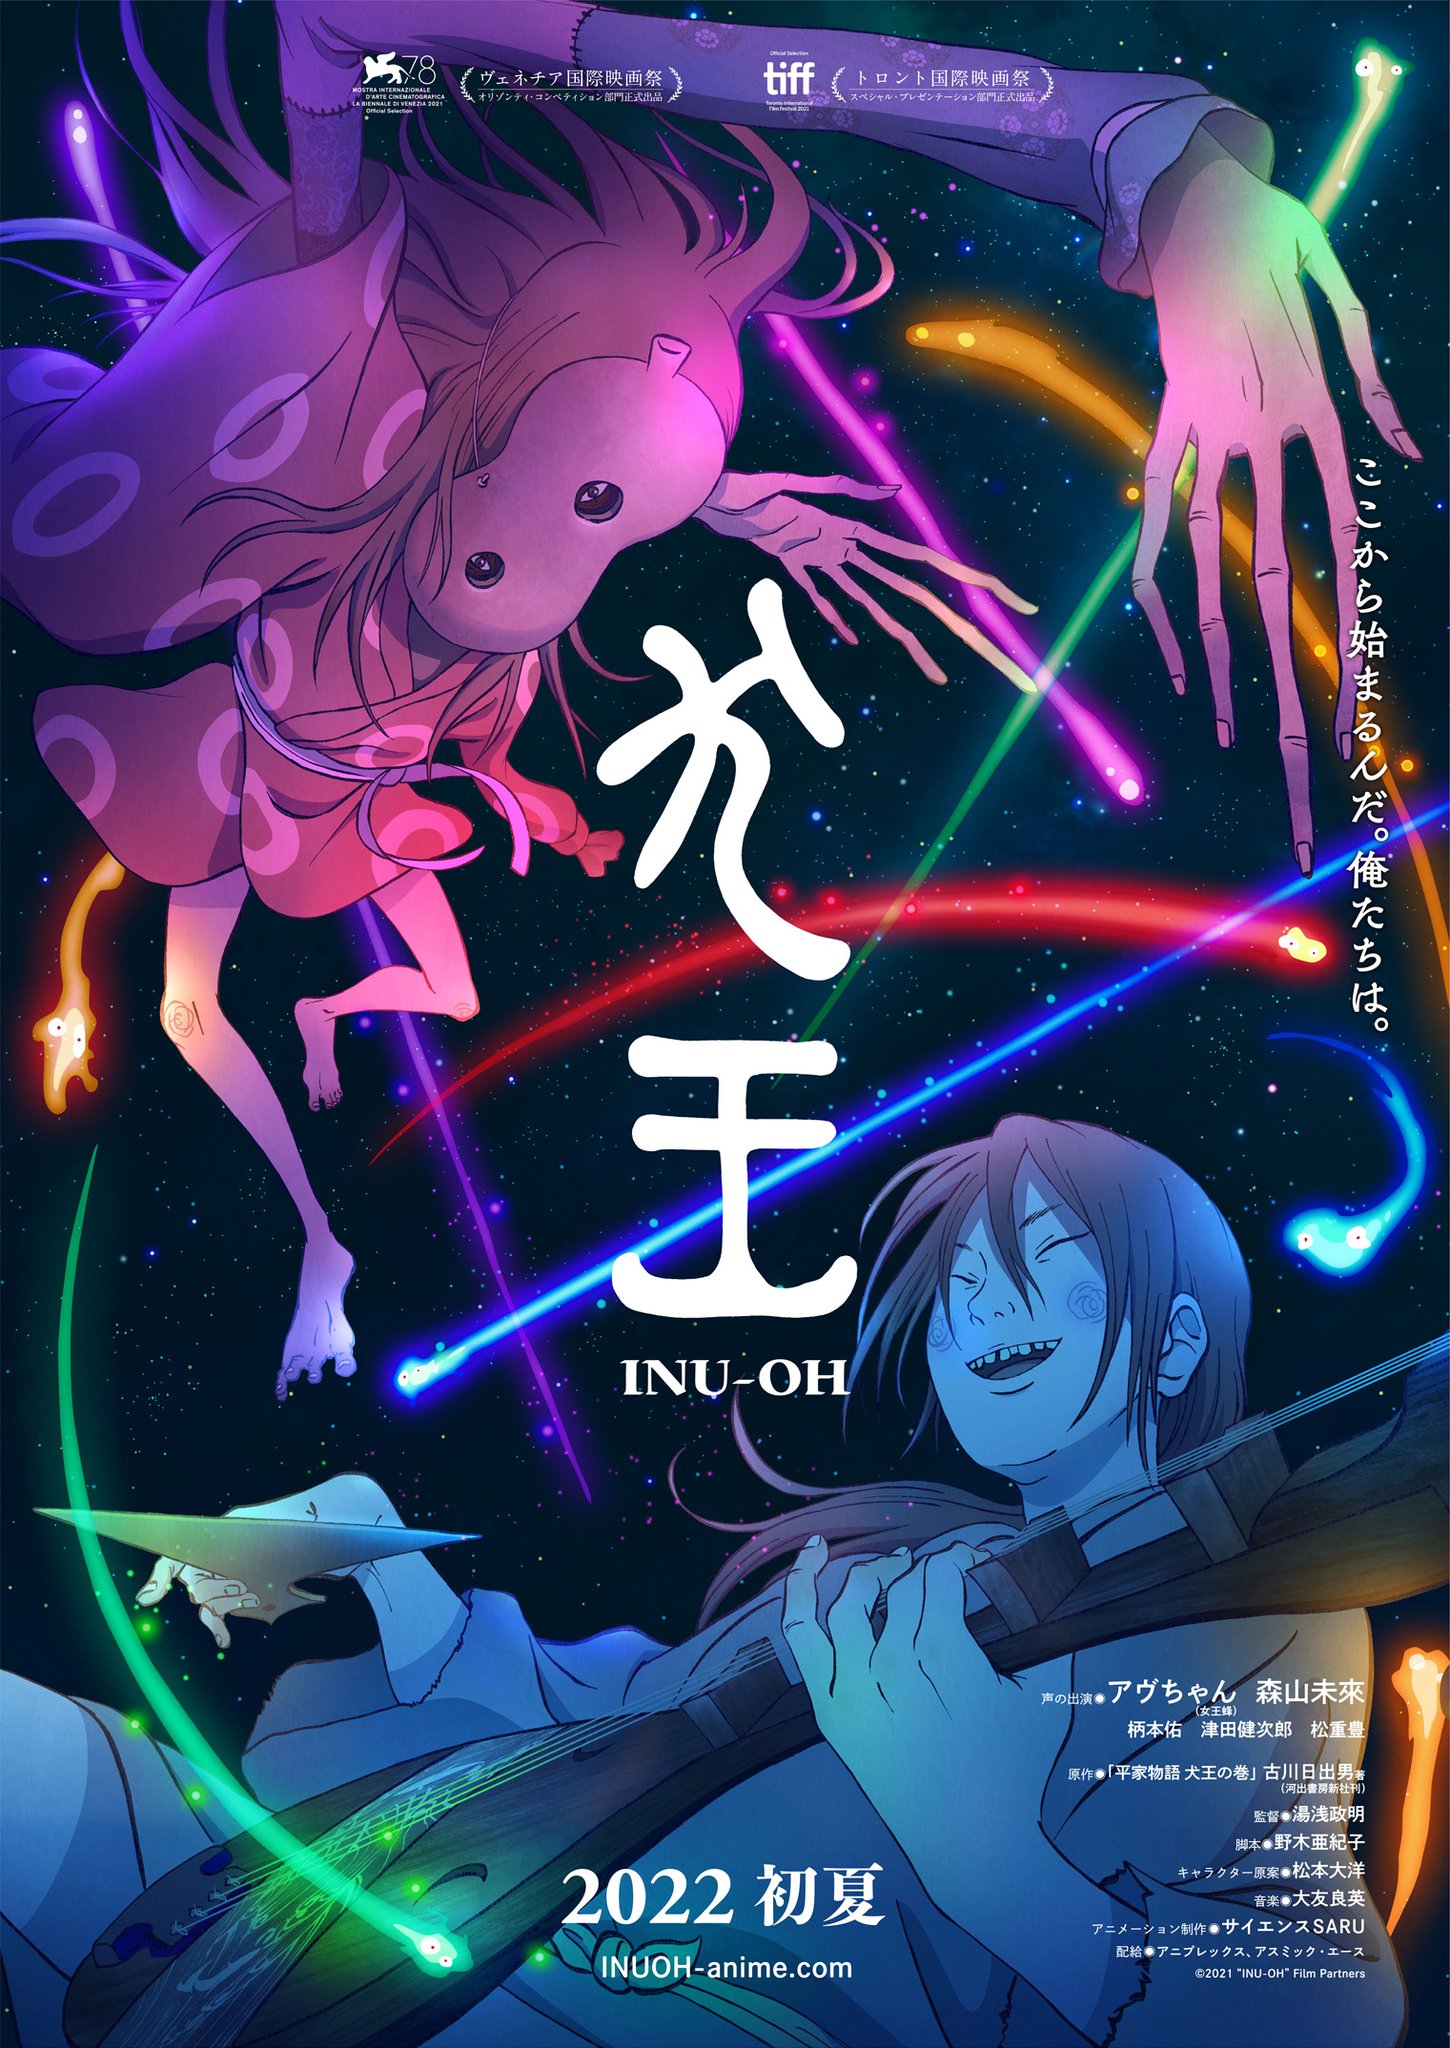 Crunchyroll - Masaaki Yuasa's INU-OH Anime Film Gets Colorful New Poster